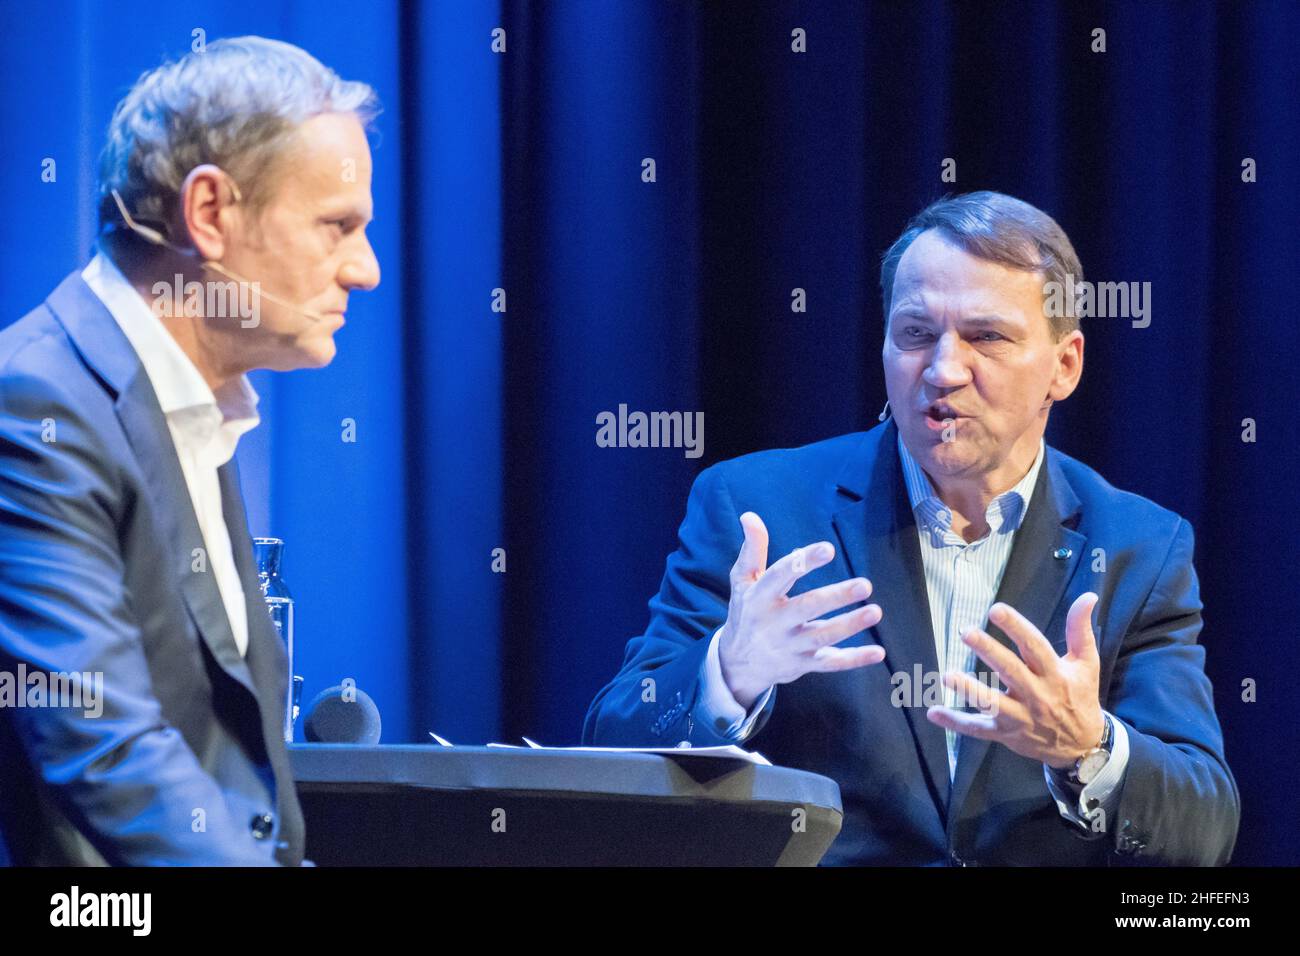 Donald Tusk and Radoslaw Sikorski in Gdansk, Poland. November 28th 2021 © Wojciech Strozyk / Alamy Stock Photo Stock Photo